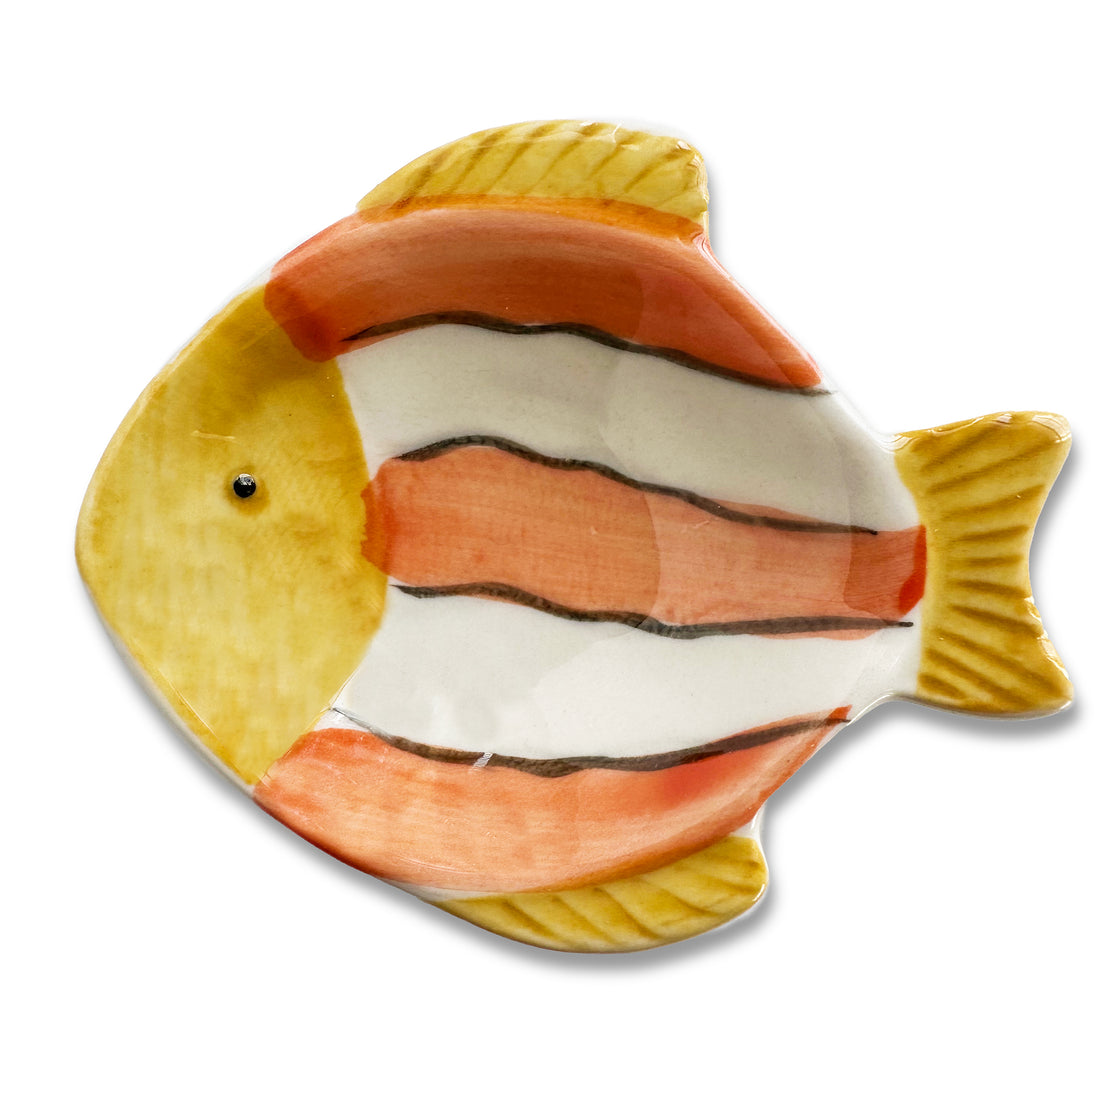 Mini Fish Plates - for Soy Sauce, Wasabi, or Any Small Garnish - Set of 6 Decorative Tiny Plates